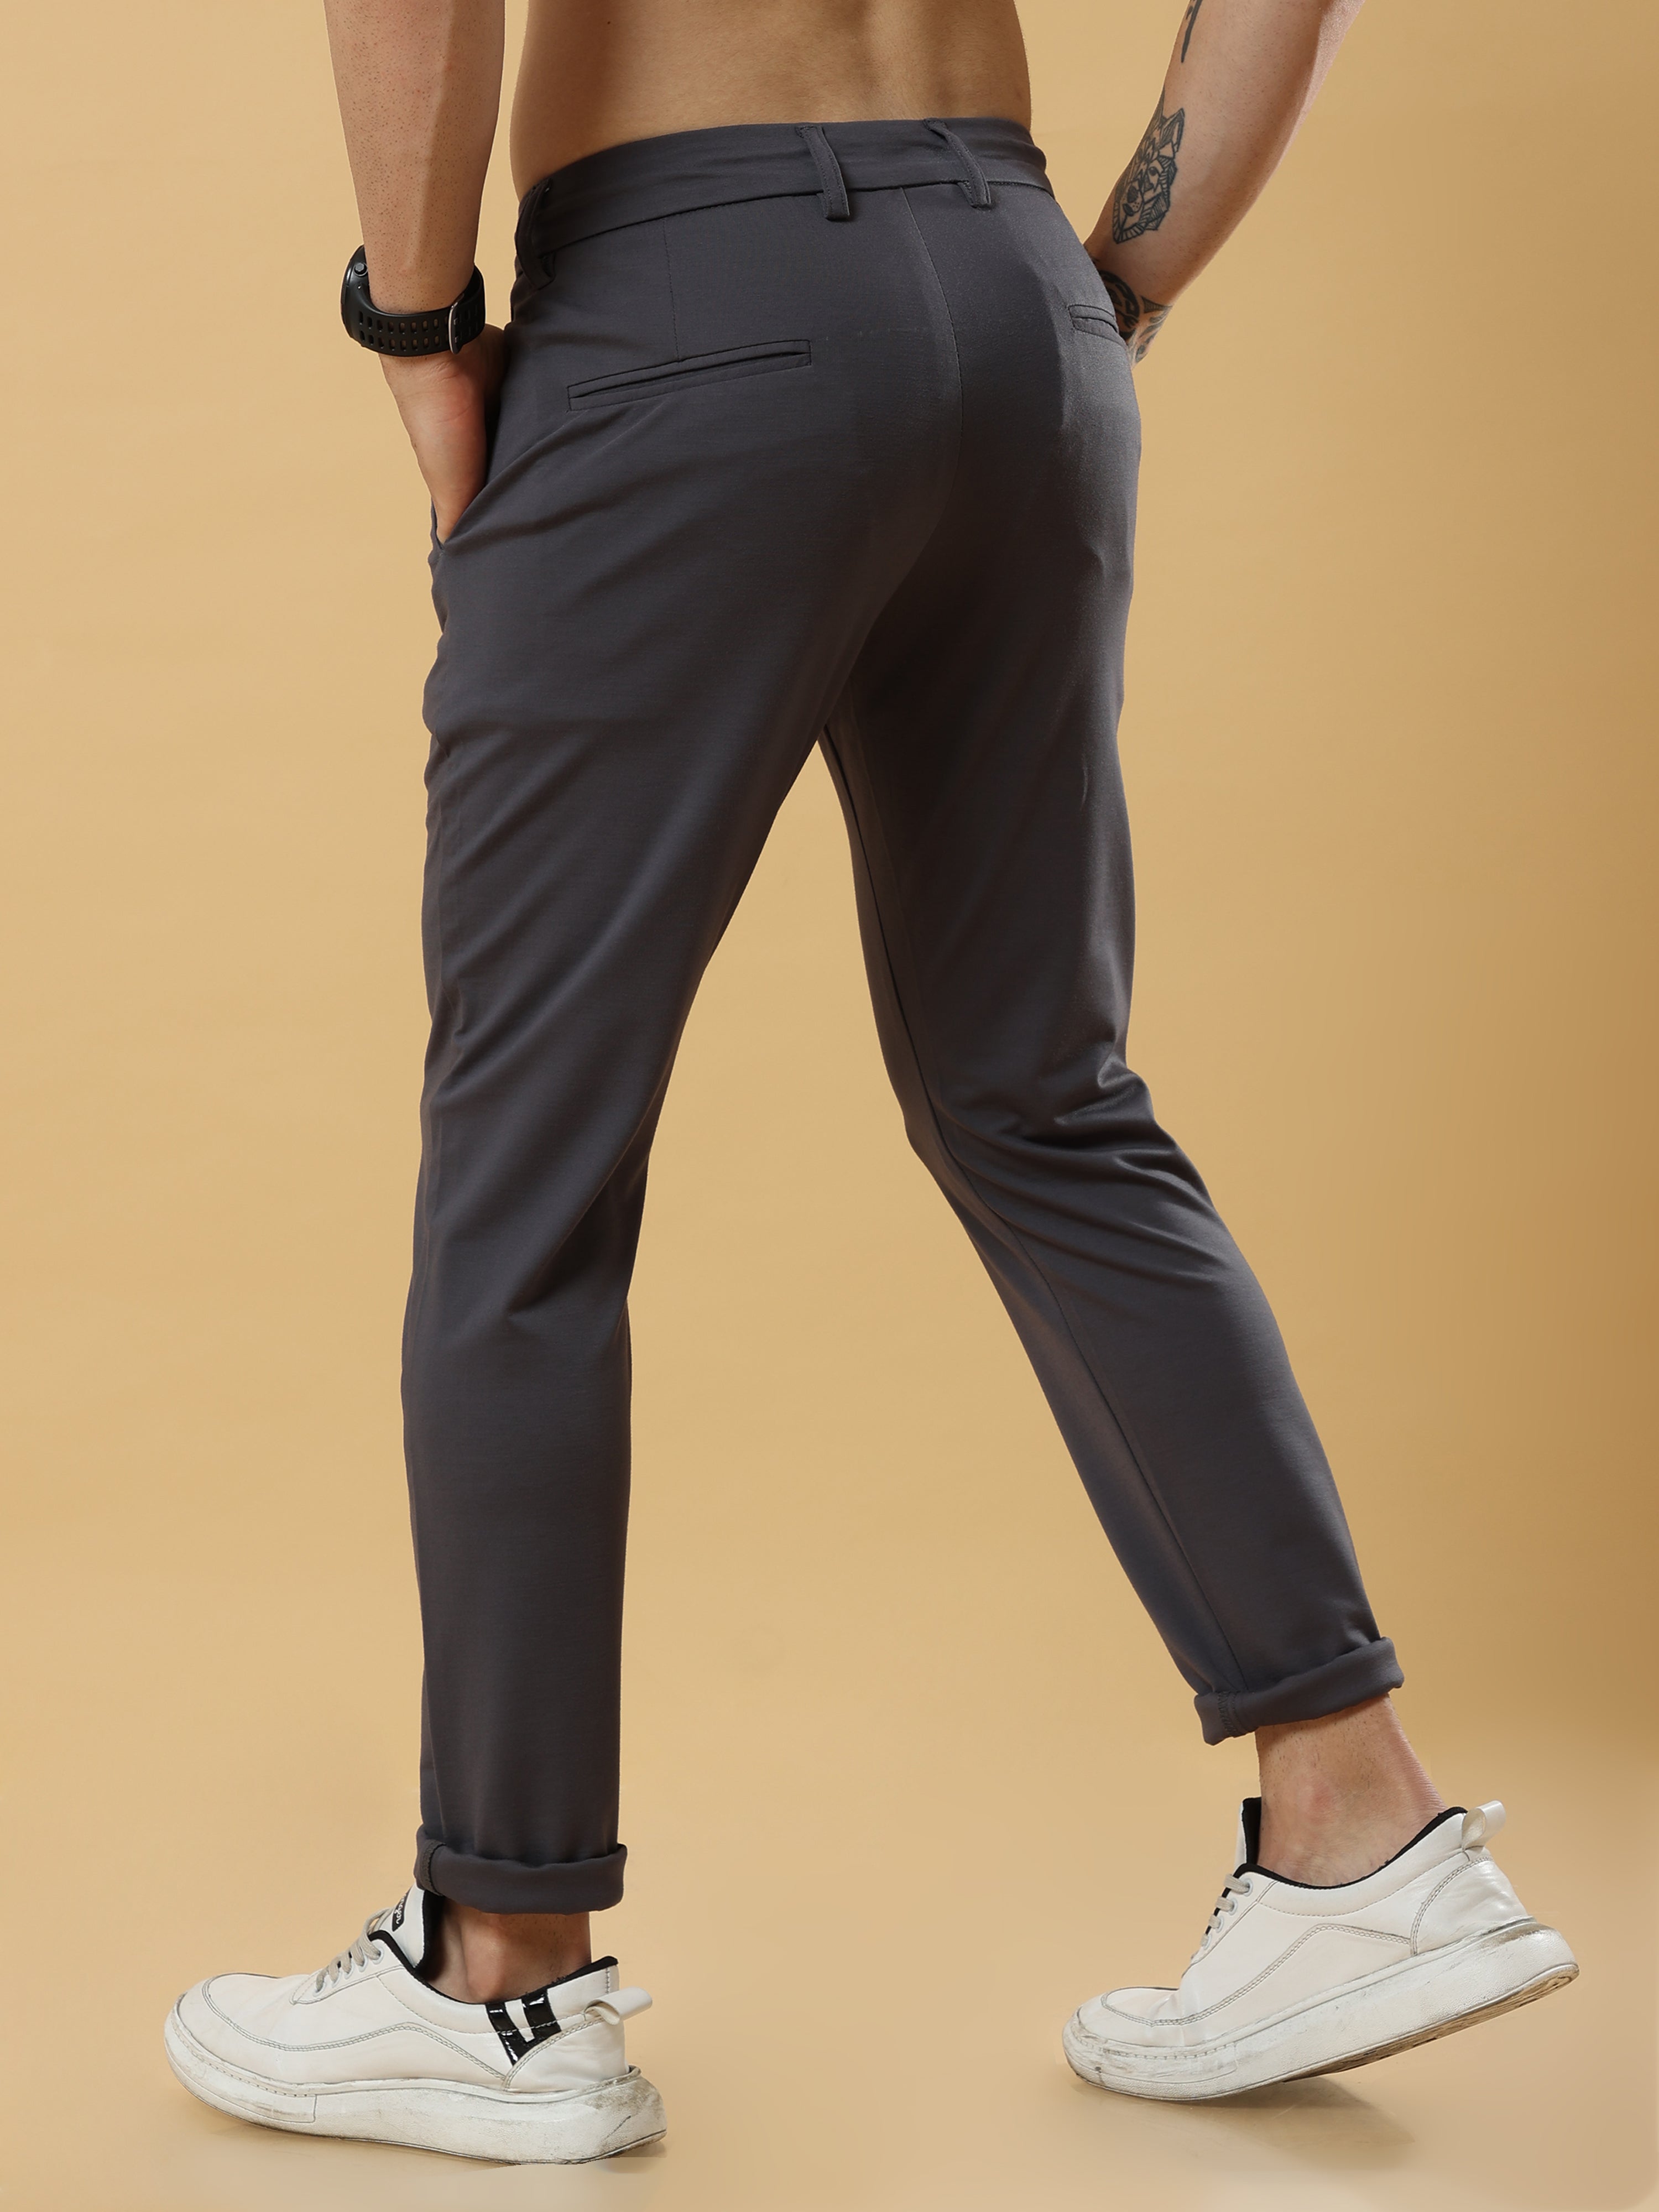 Men's Suit Pants & Trousers - Wool Dress Pants & Slim Fit Trousers |  SUITSUPPLY Germany